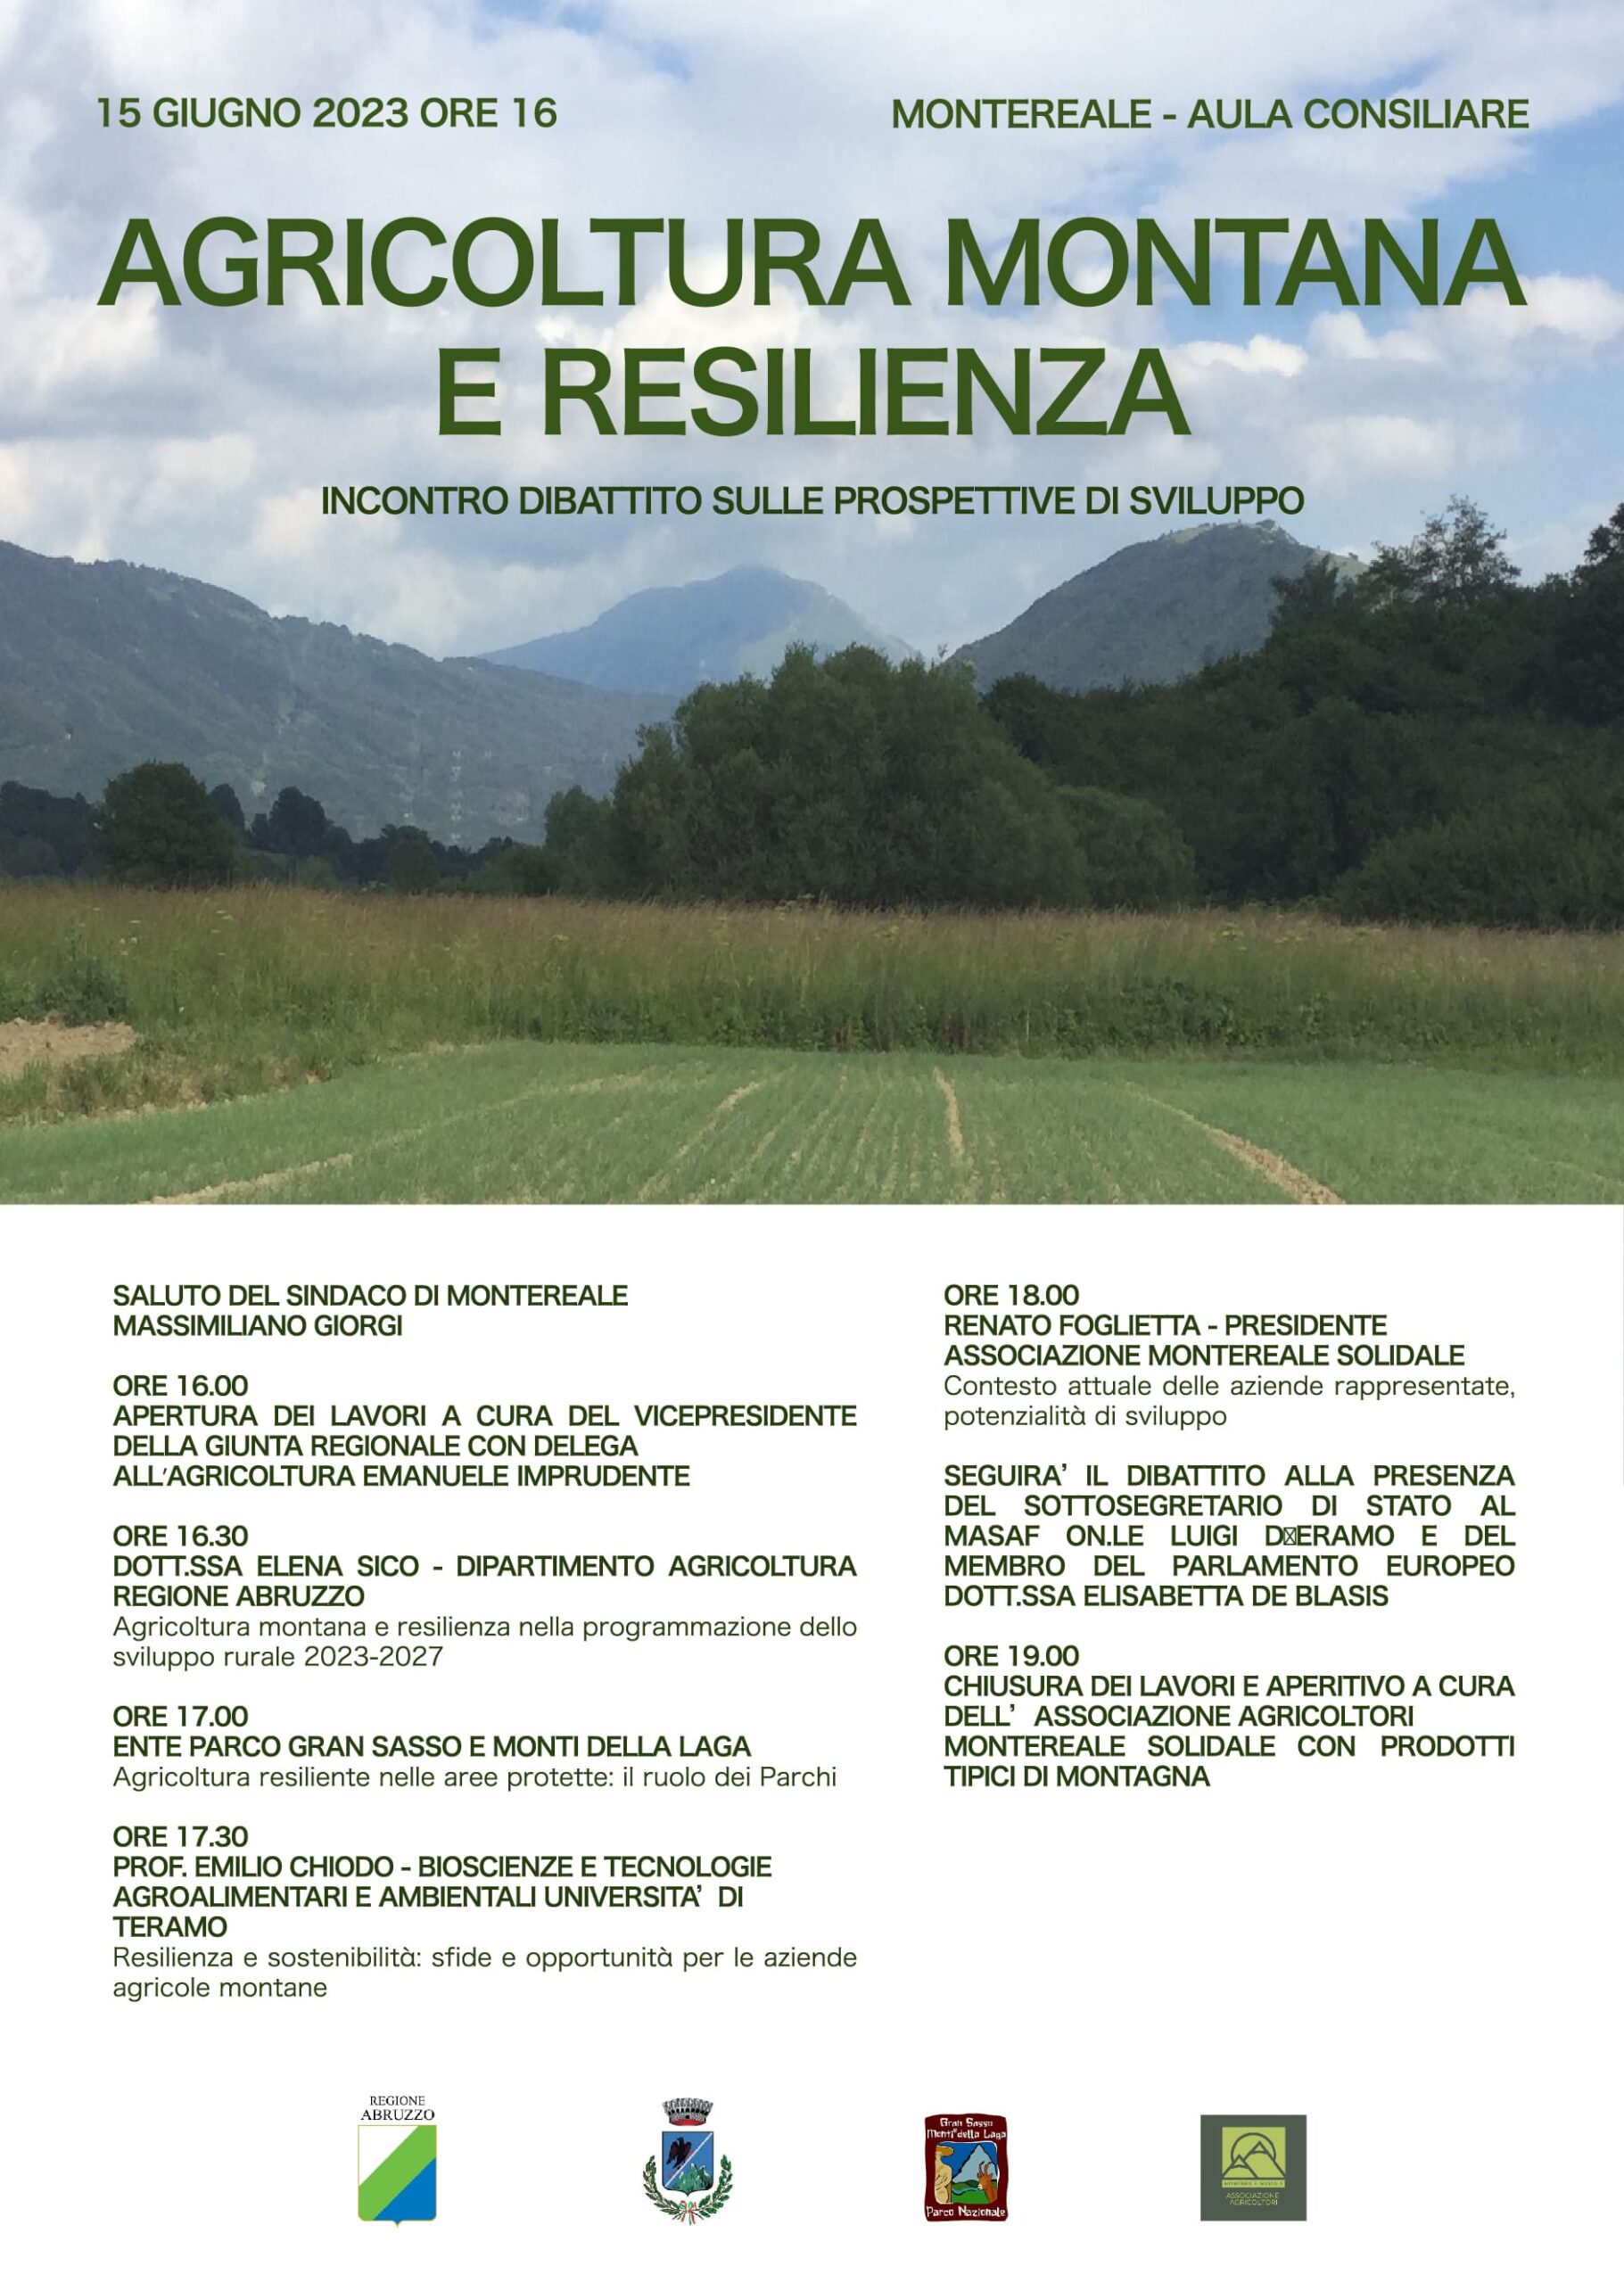 Agricoltura montana e resilienza